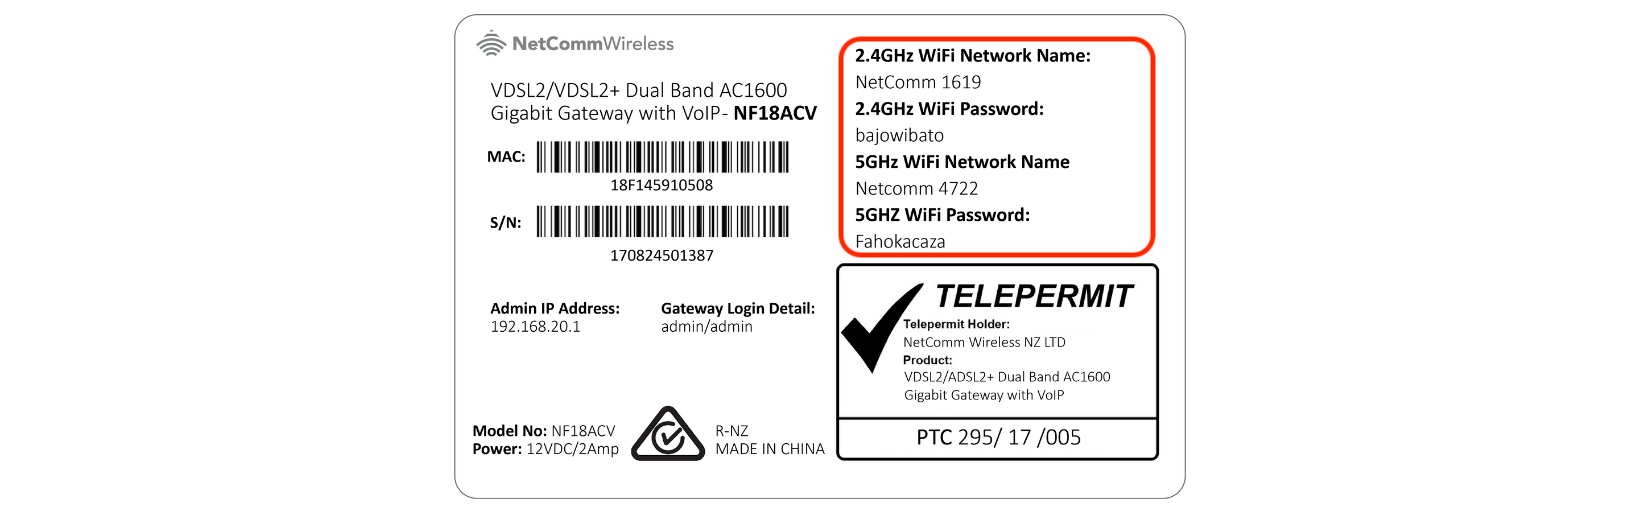 MATE Netcomm Modem Wi Fi details